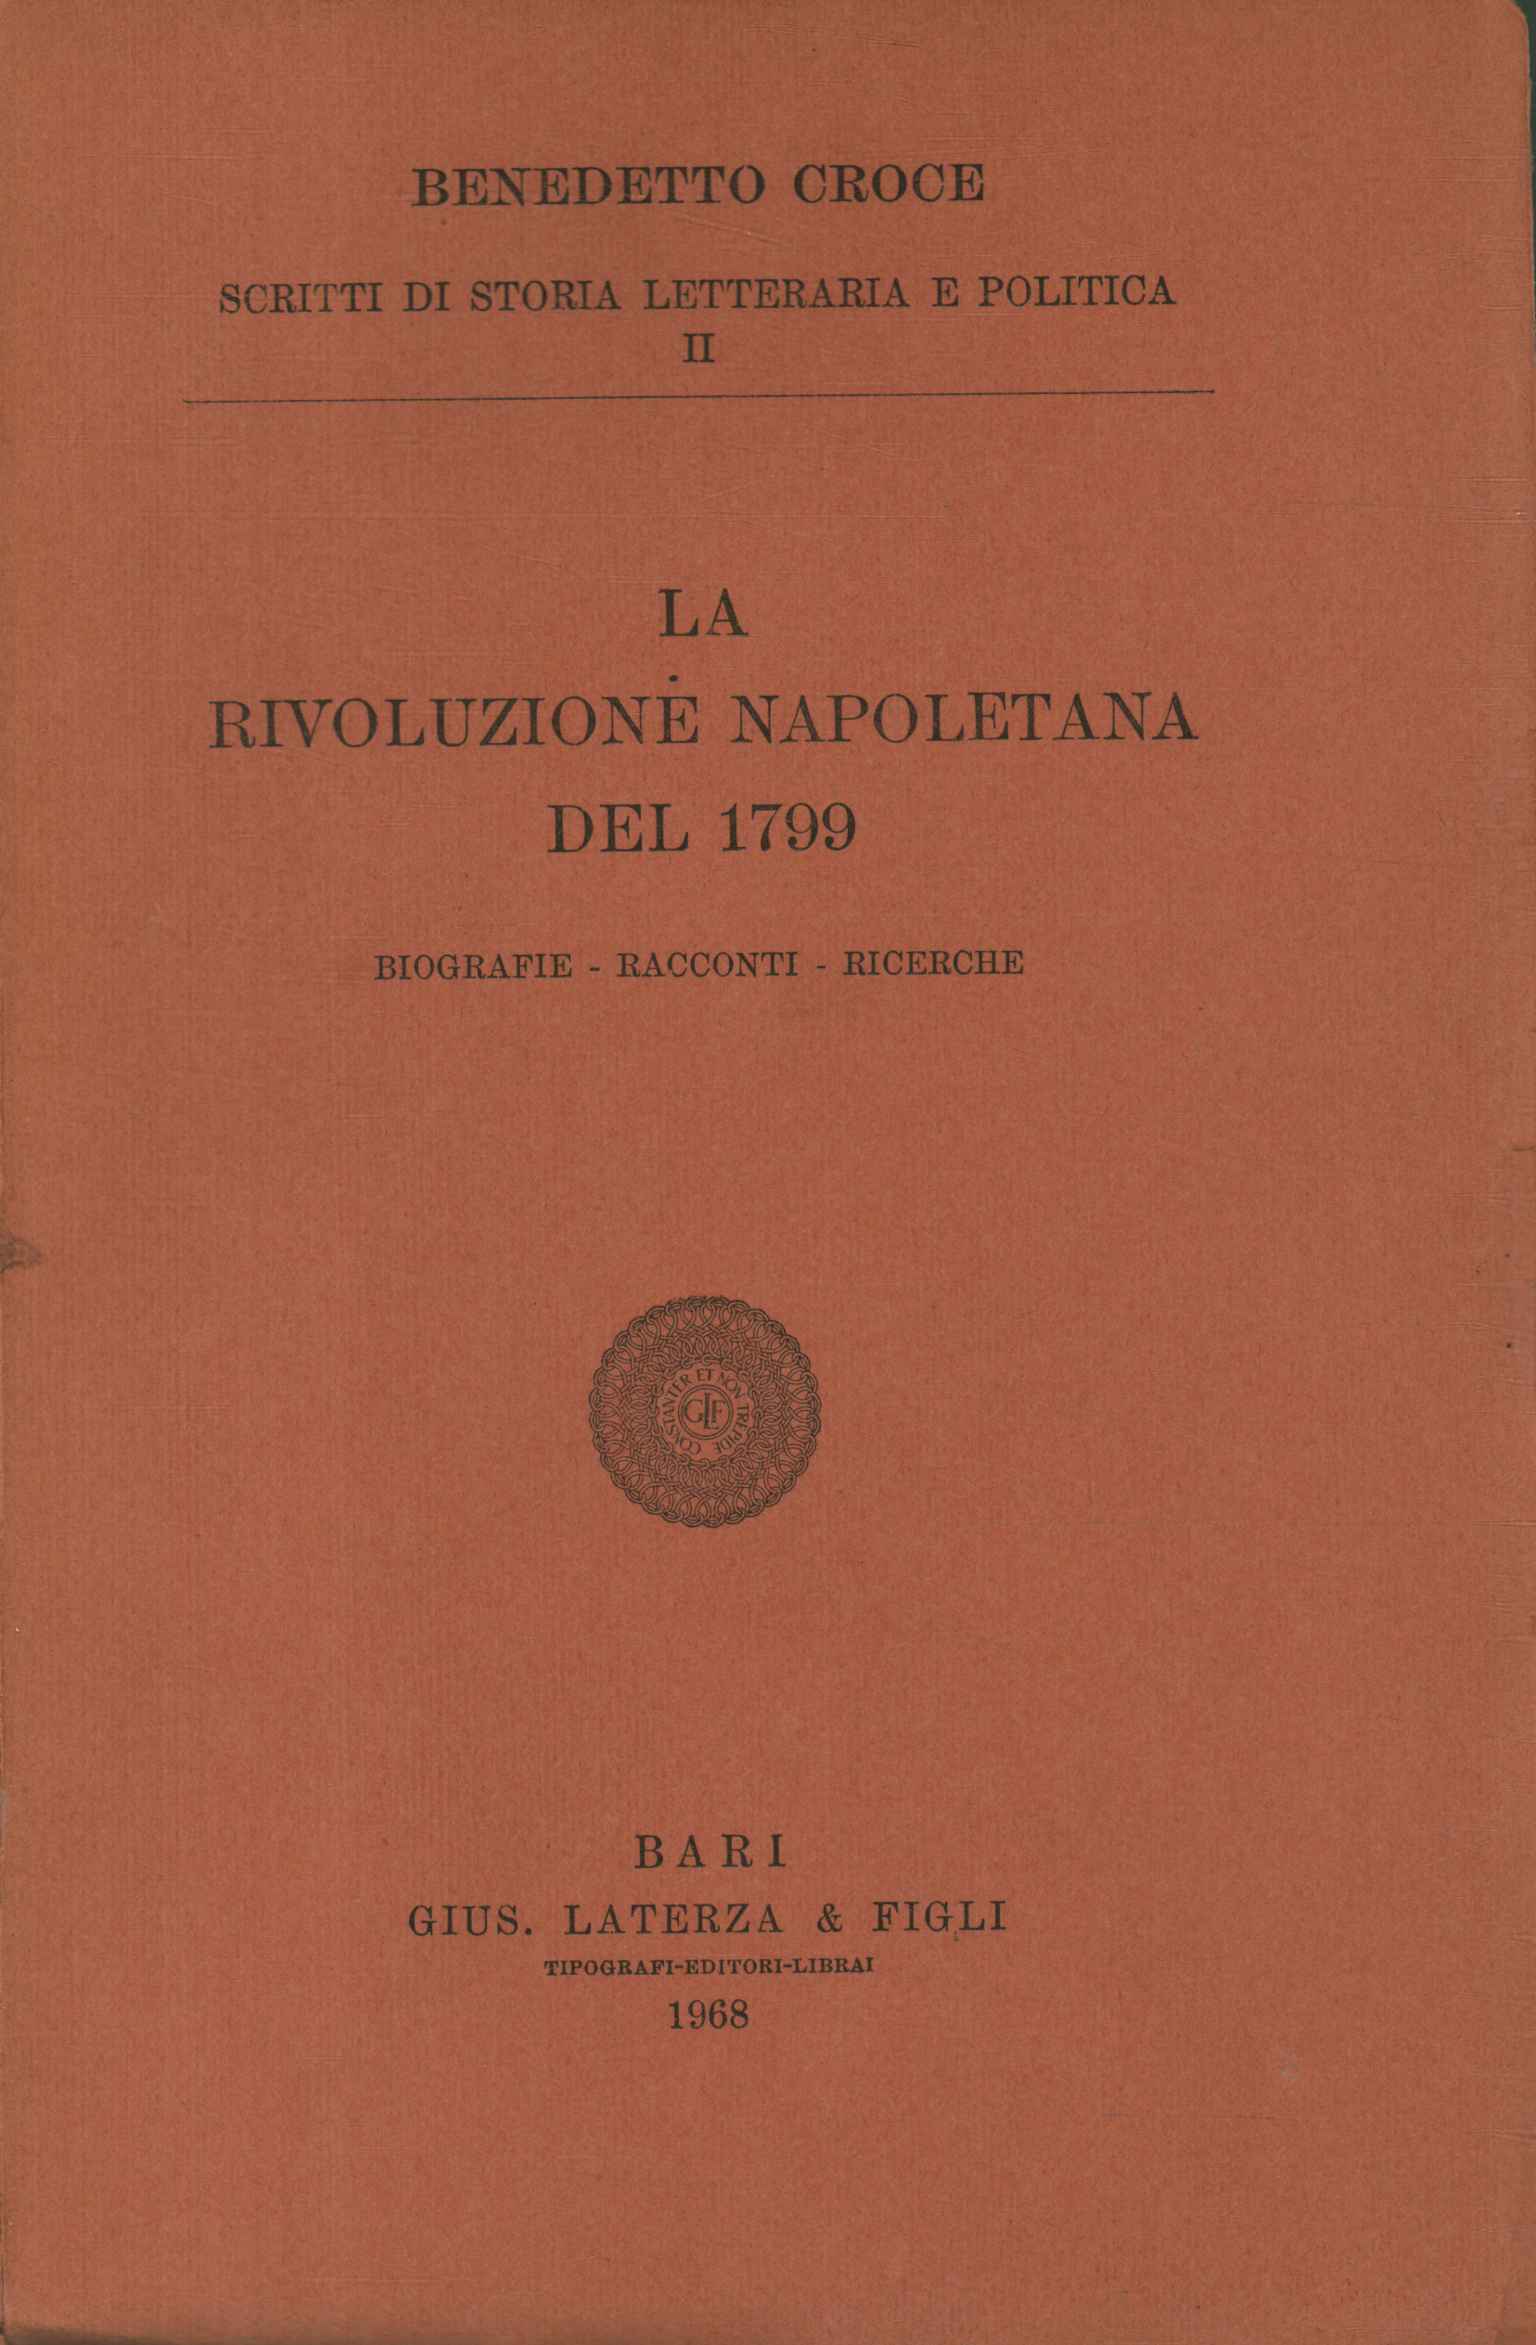 The Neapolitan revolution of 1799